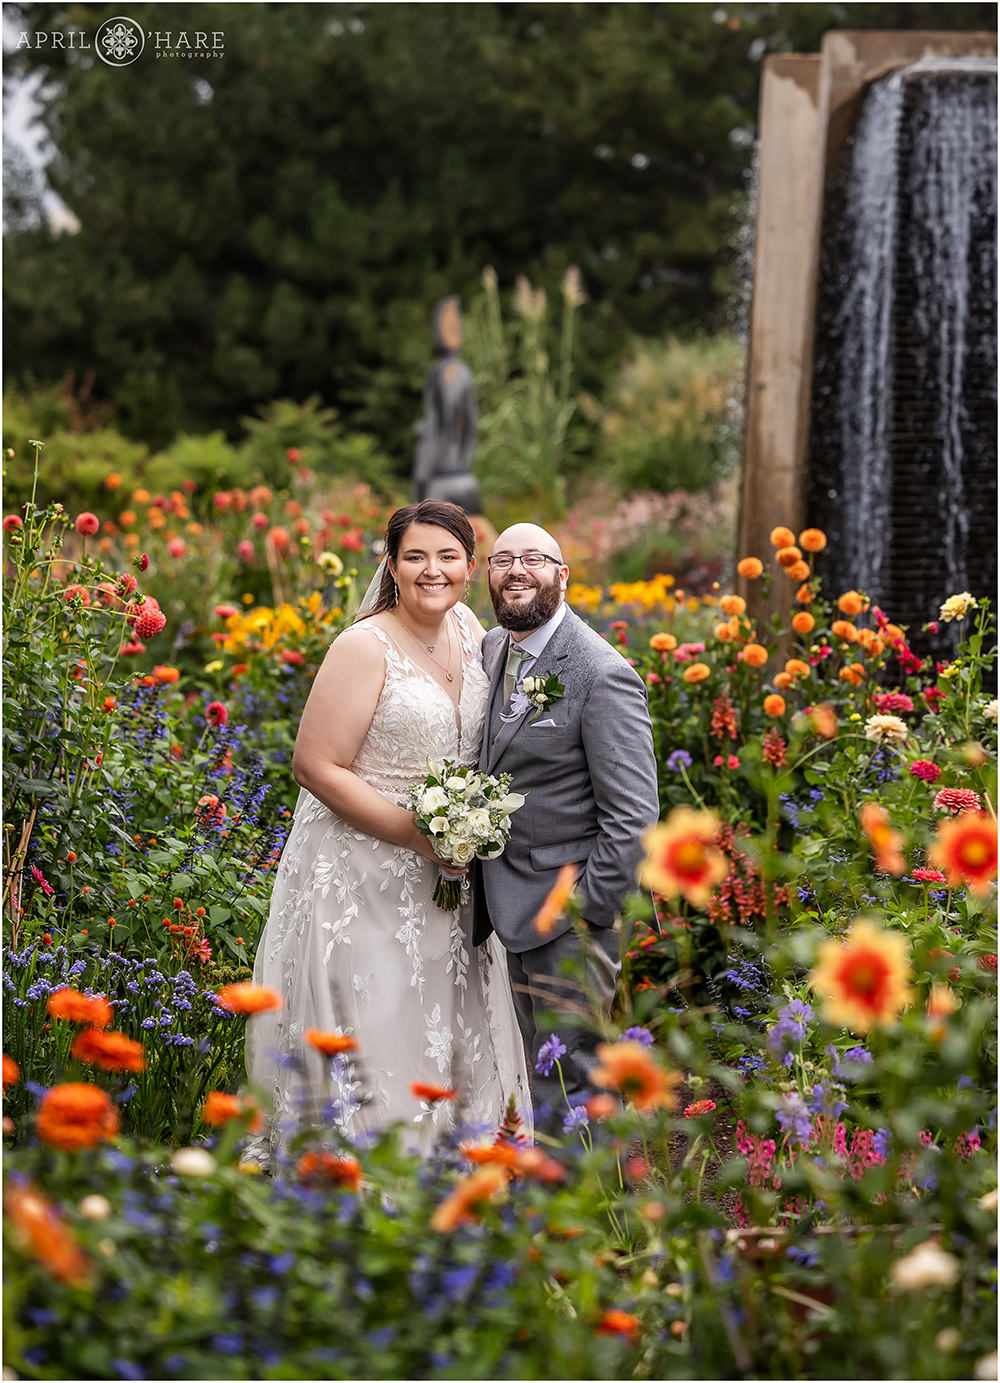 Stunning colorful garden wedding photo at Denver Botanic Gardens